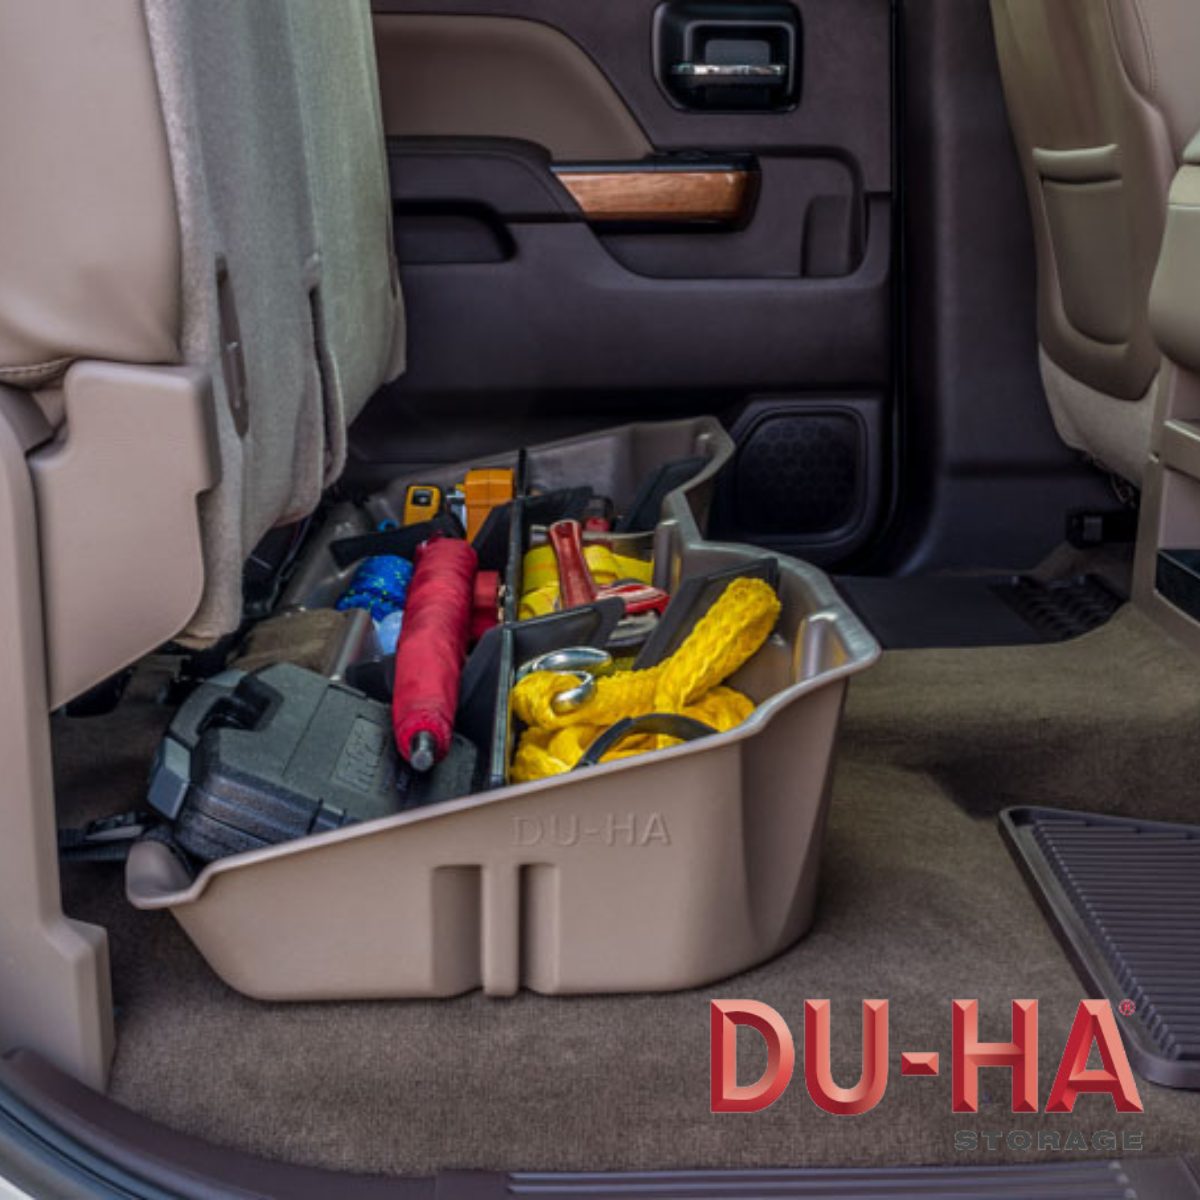 DU-HA's Storage